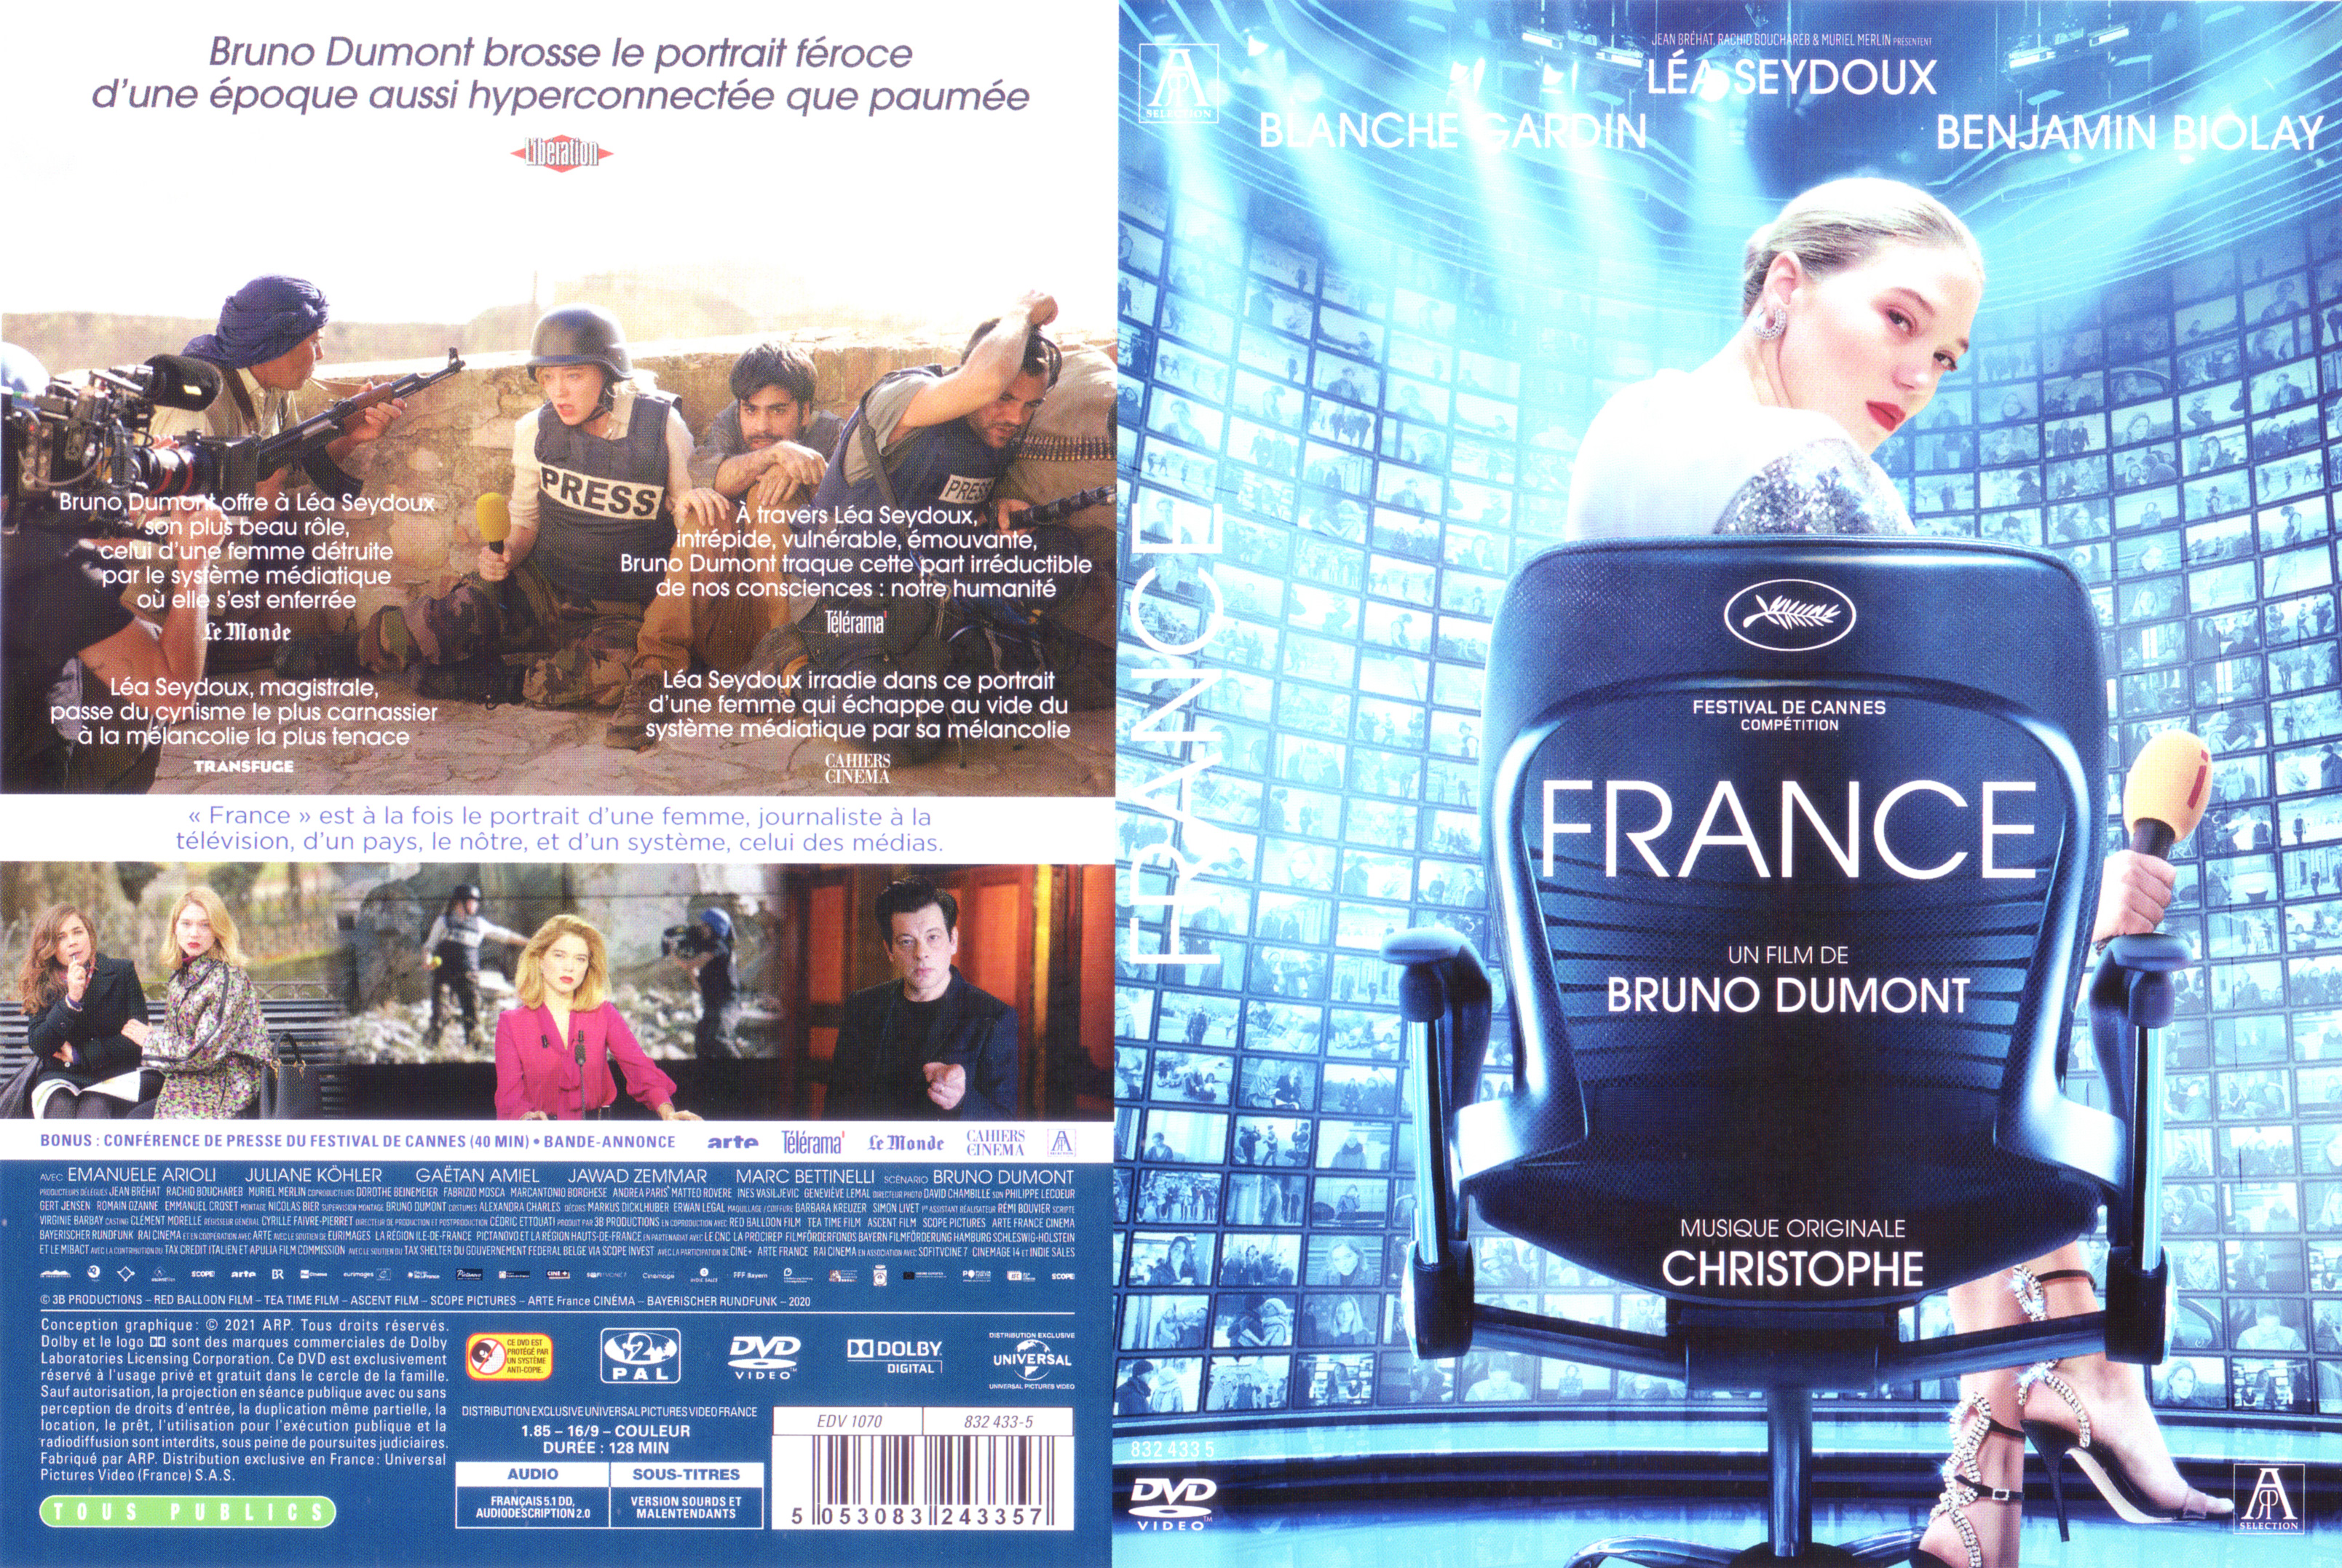 Jaquette DVD France